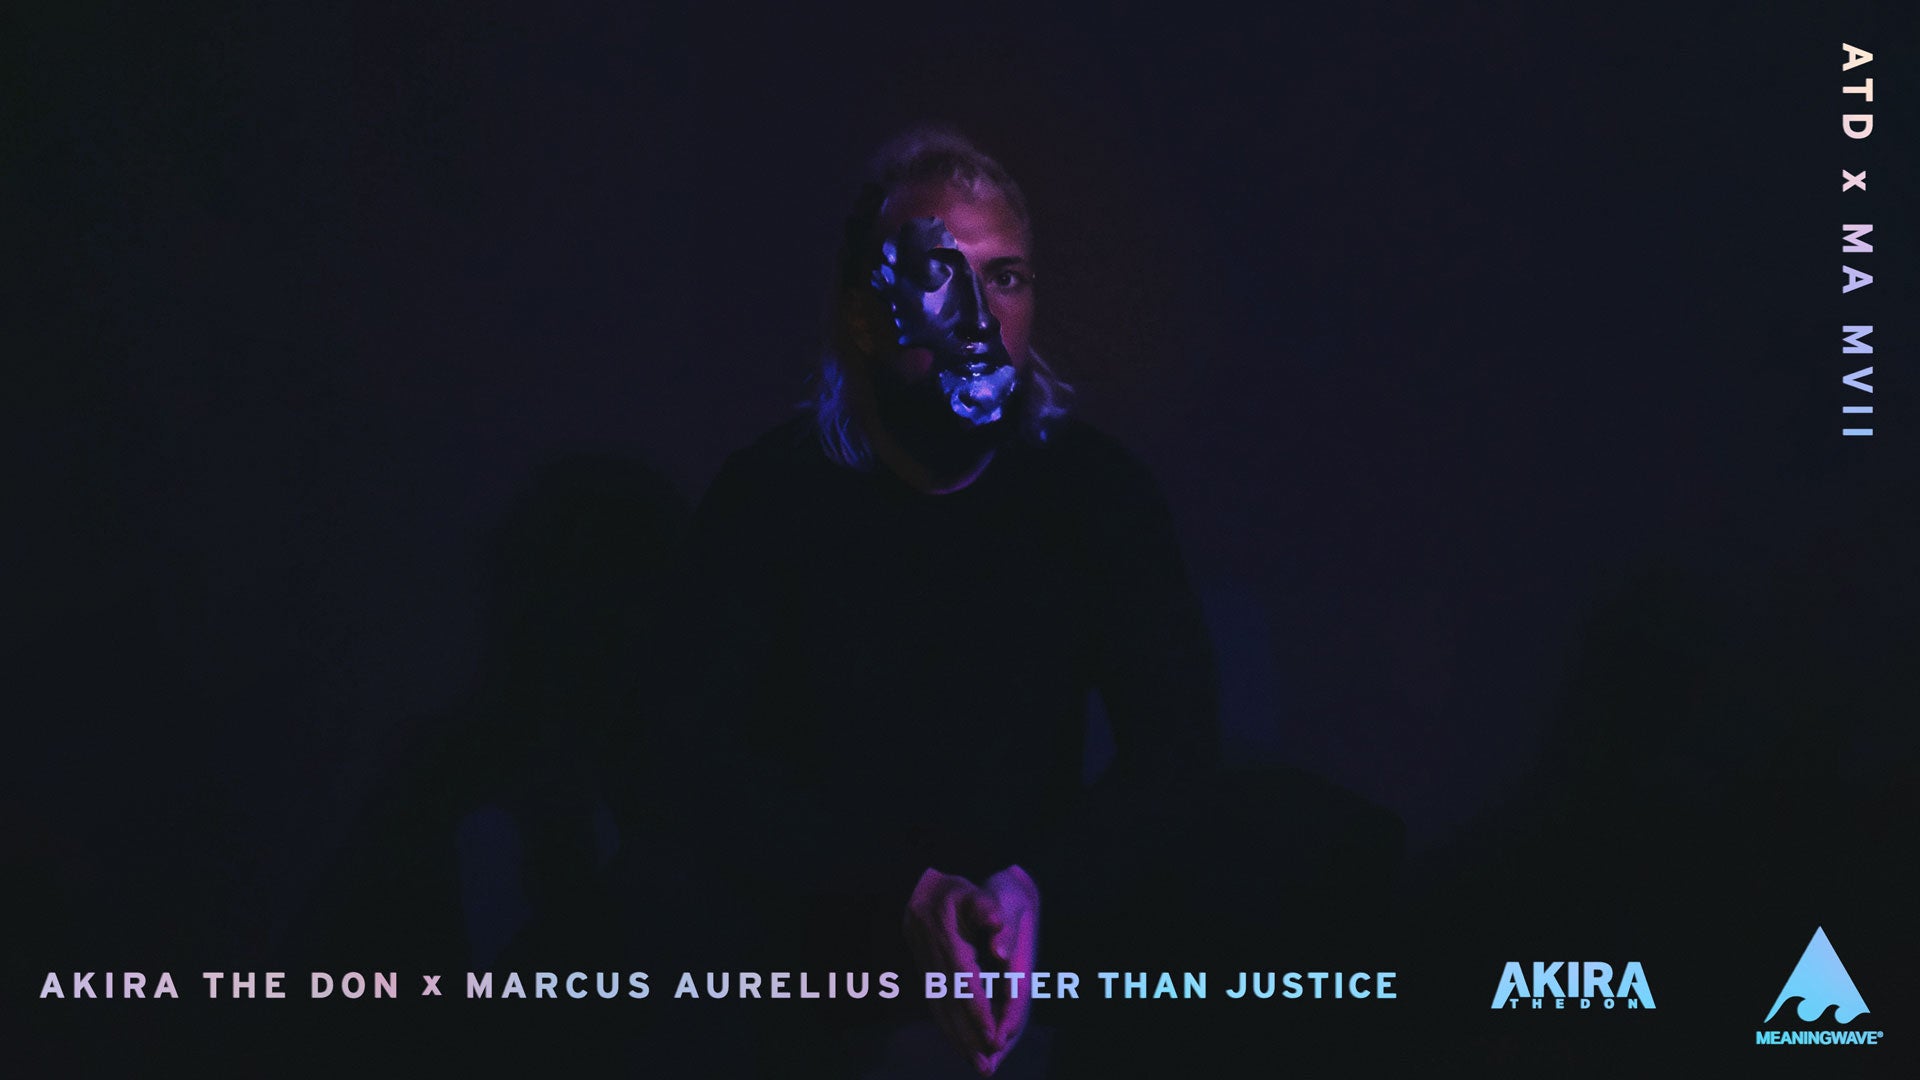 MARCUS AURELIUS X AKIRA THE DON - BETTER THAN JUSTICE | LYRIC VIDEO